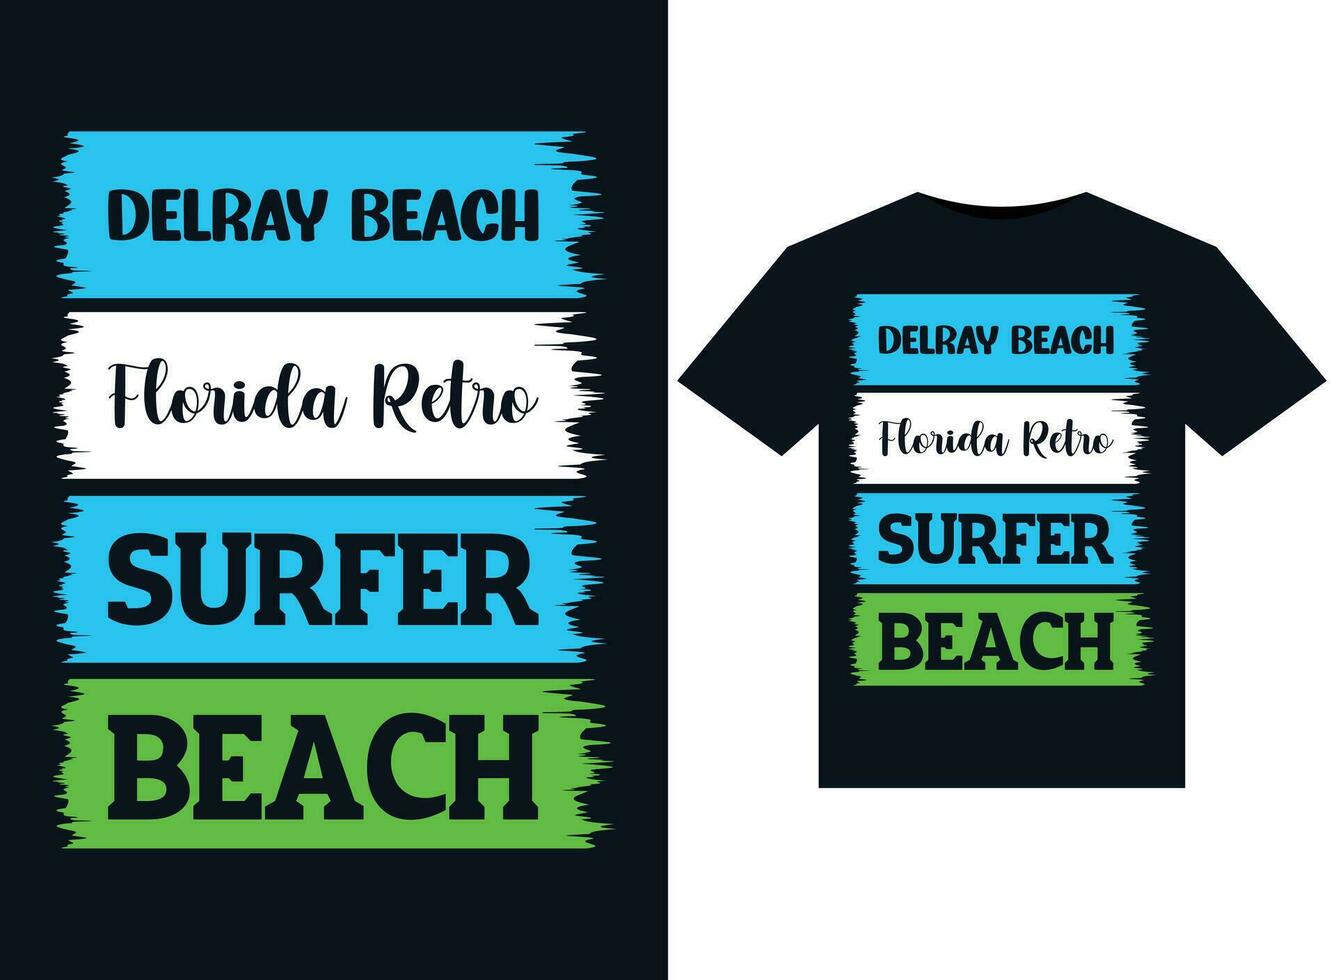 Delray Beach Florida Retro Surfer Beach illustrations for print-ready T-Shirts design vector